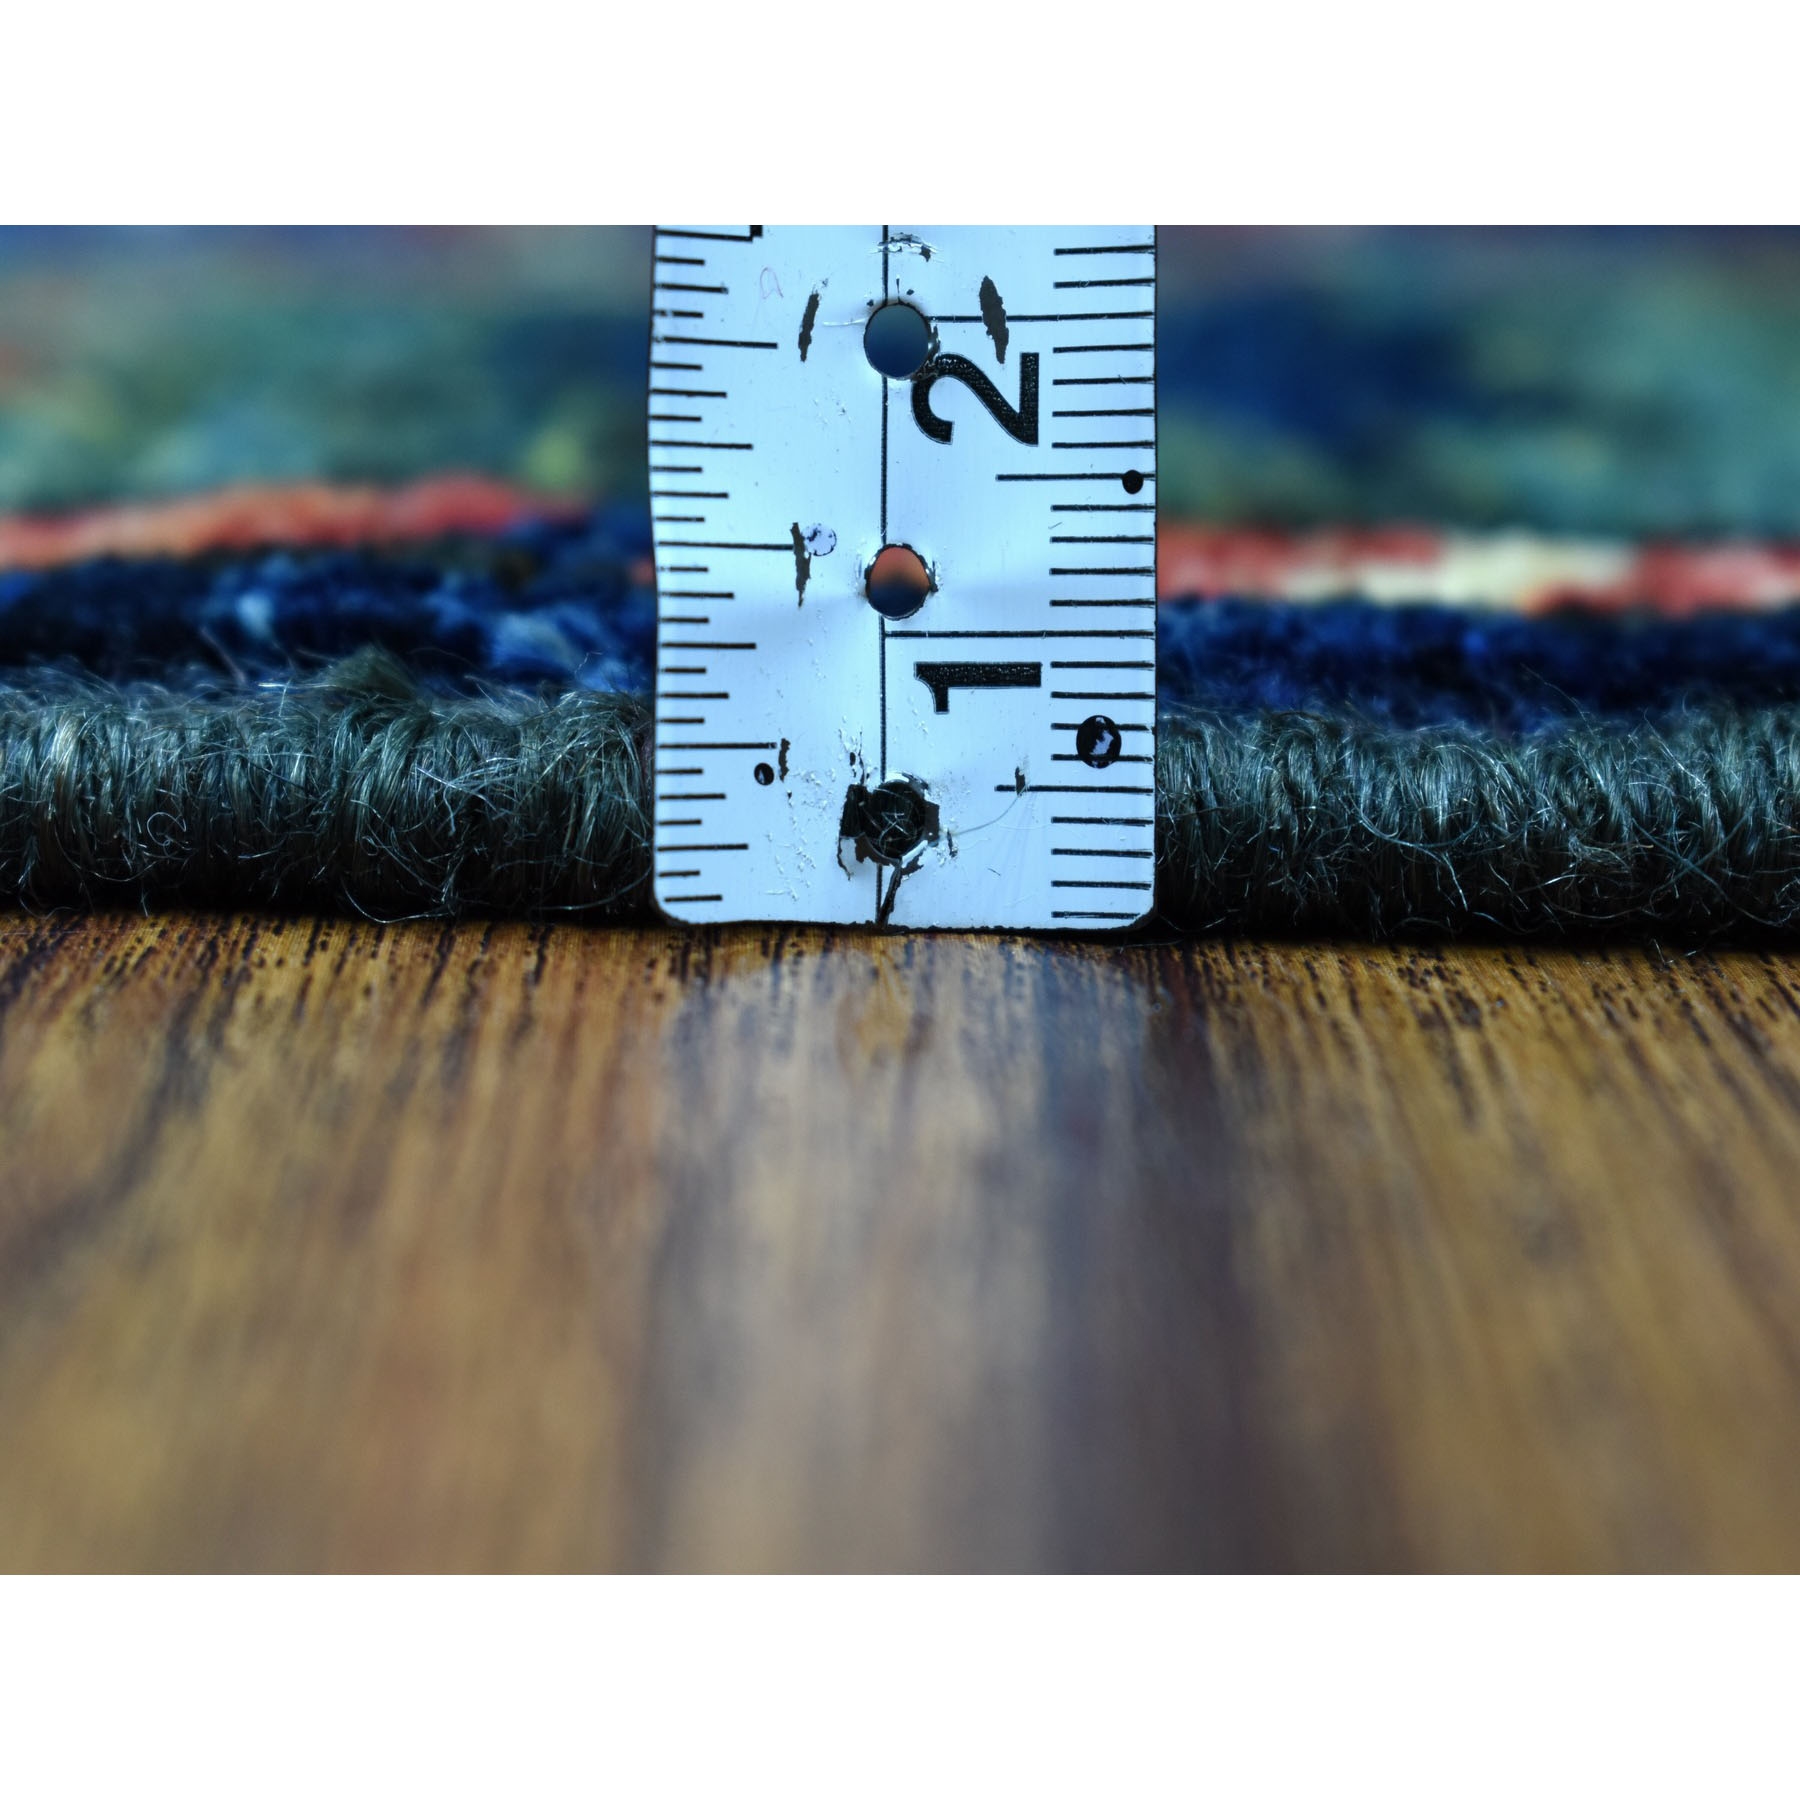 2-x3-2  Blue Afghan Ersari Tribal Design Hand Knotted Pure Wool Oriental Rug 